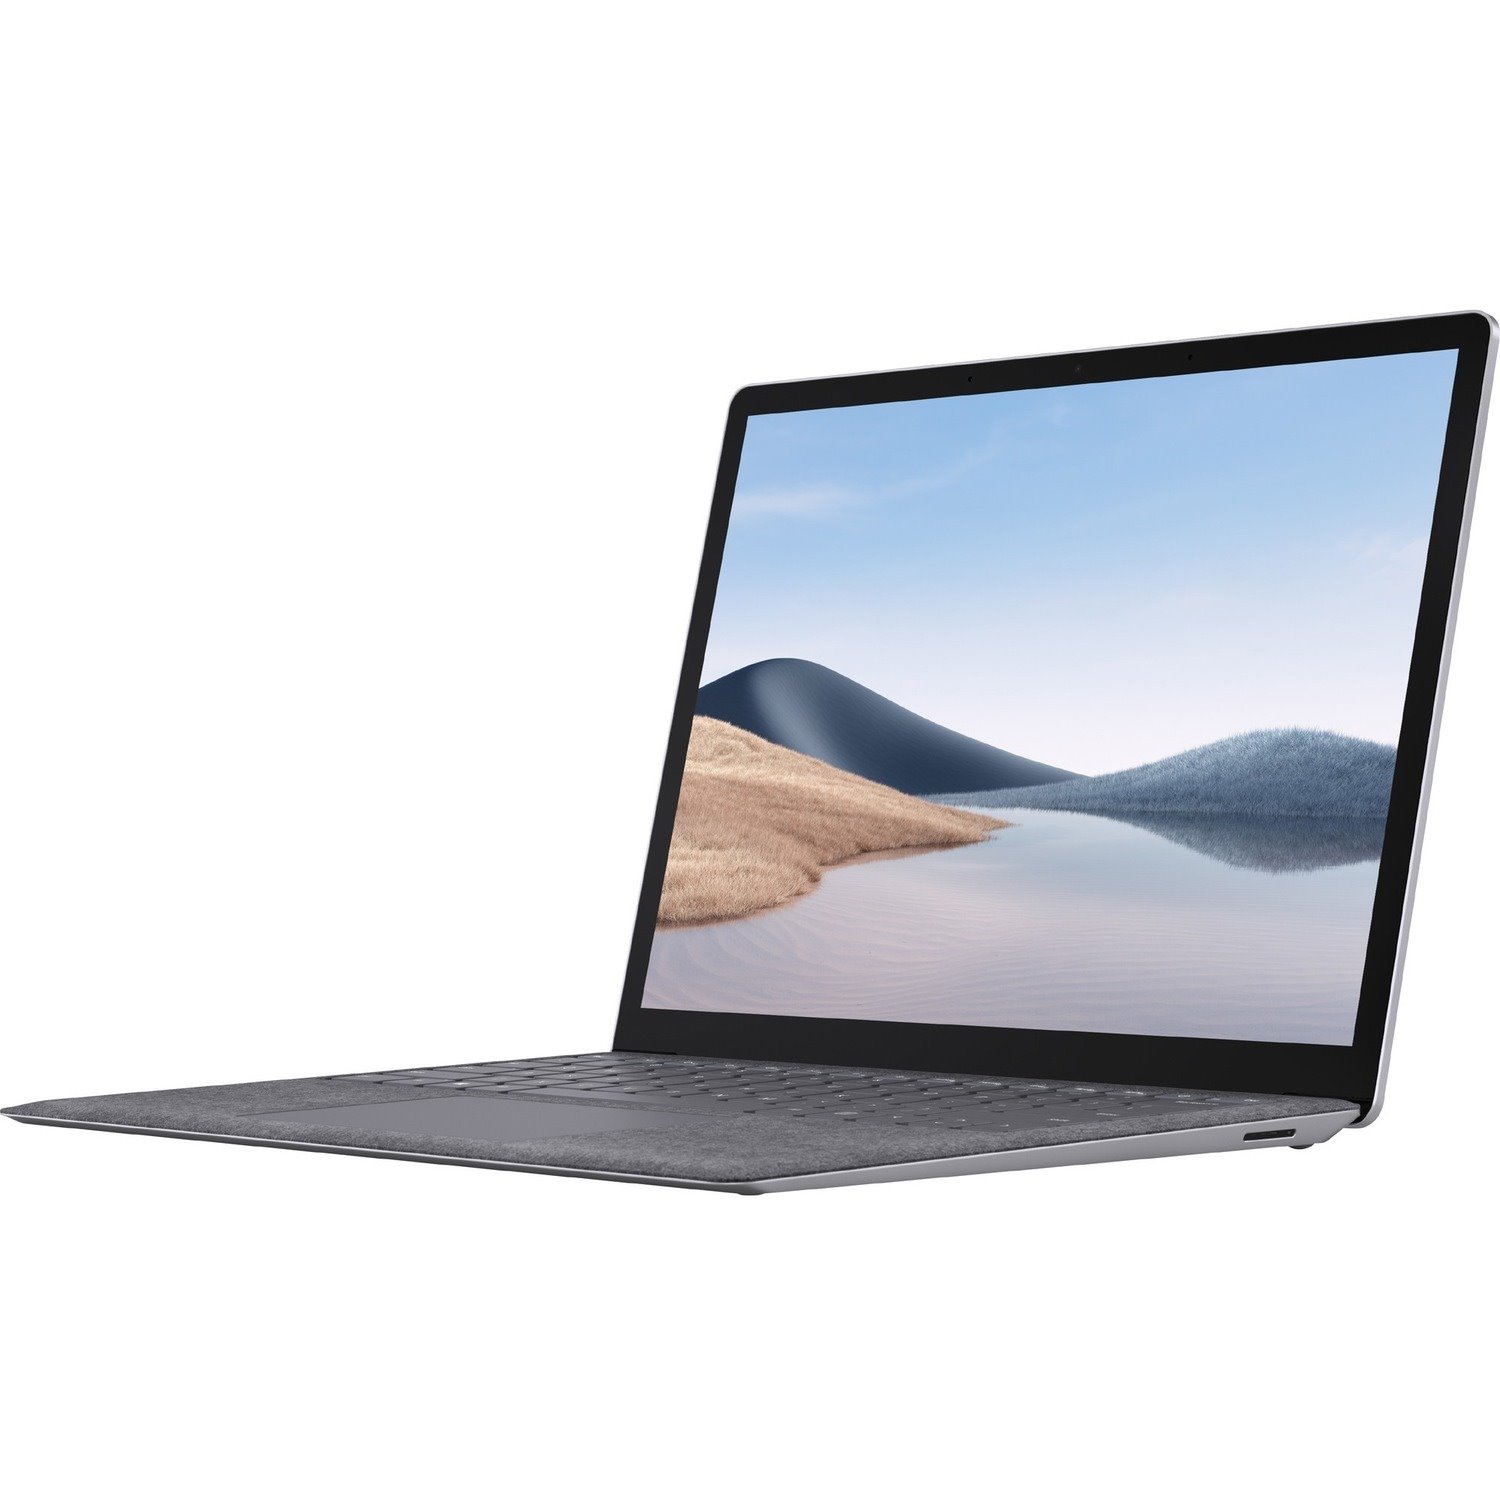 Microsoft Surface Laptop 4 34.3 cm (13.5") Touchscreen Notebook - 2256 x 1504 - AMD Ryzen 5 4680U Hexa-core (6 Core) - 16 GB Total RAM - 256 GB SSD - Platinum